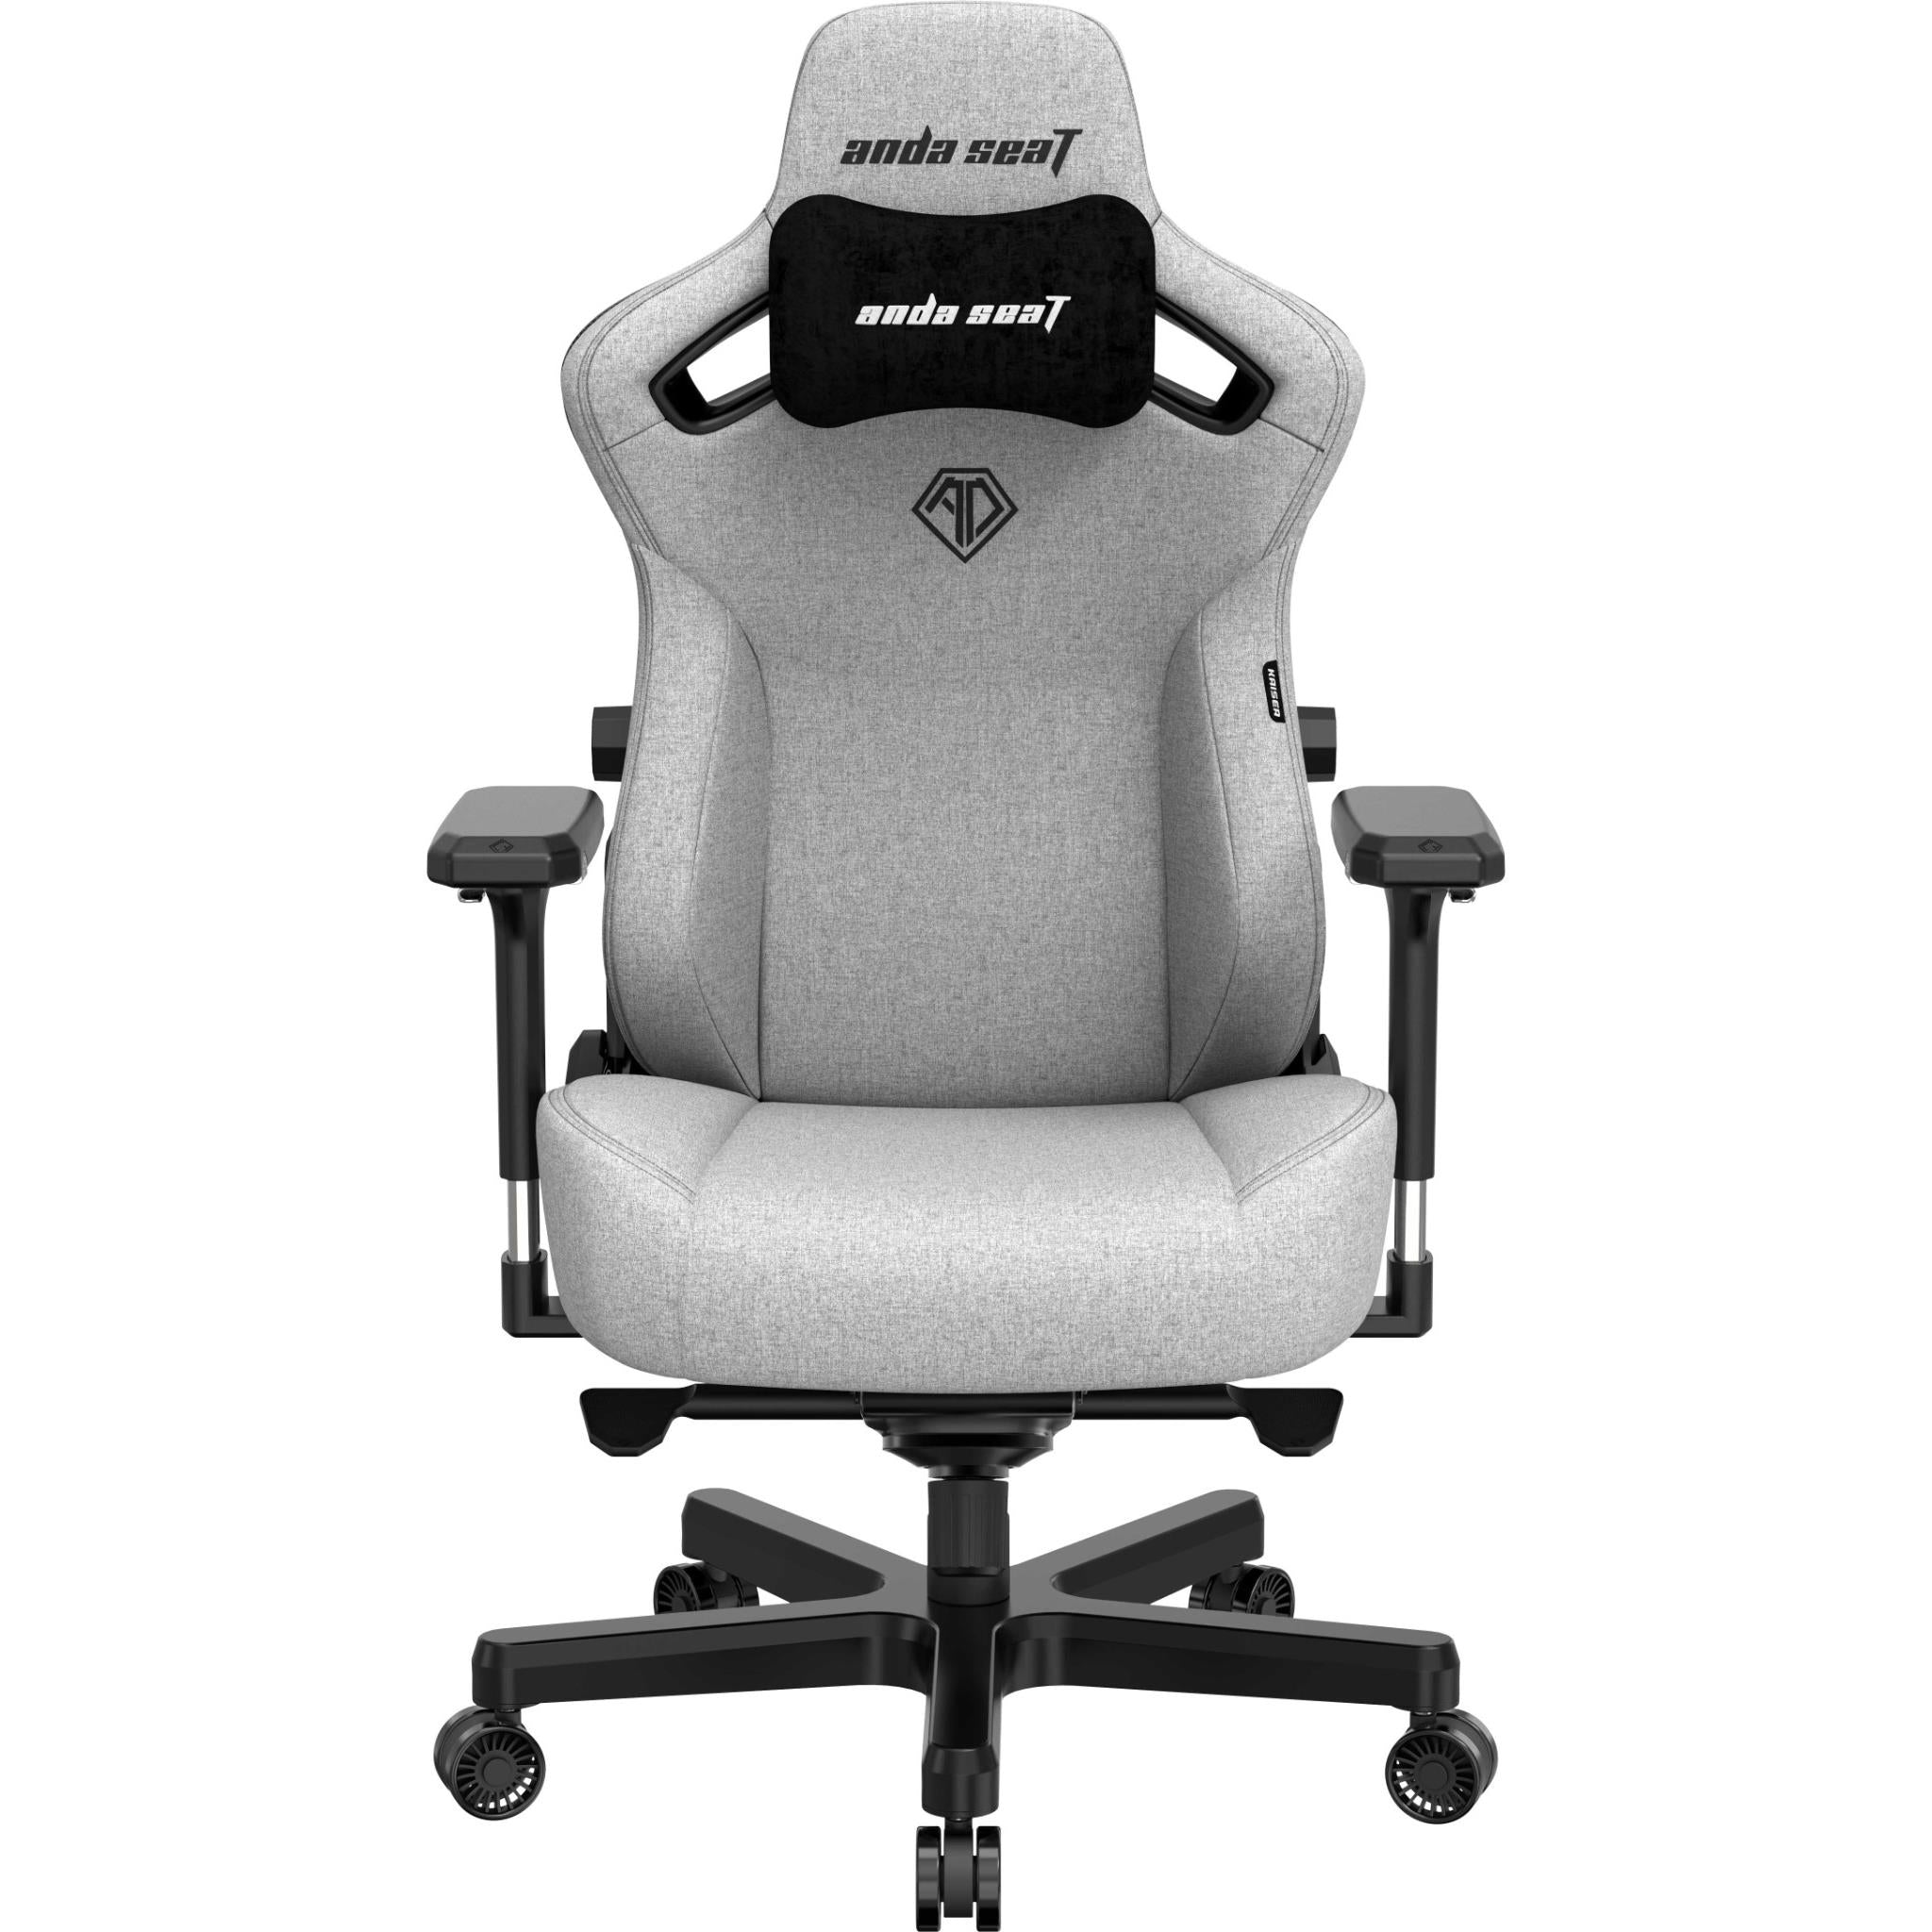 anda seat kaiser 3 series premium gaming chair grey fabric (large)